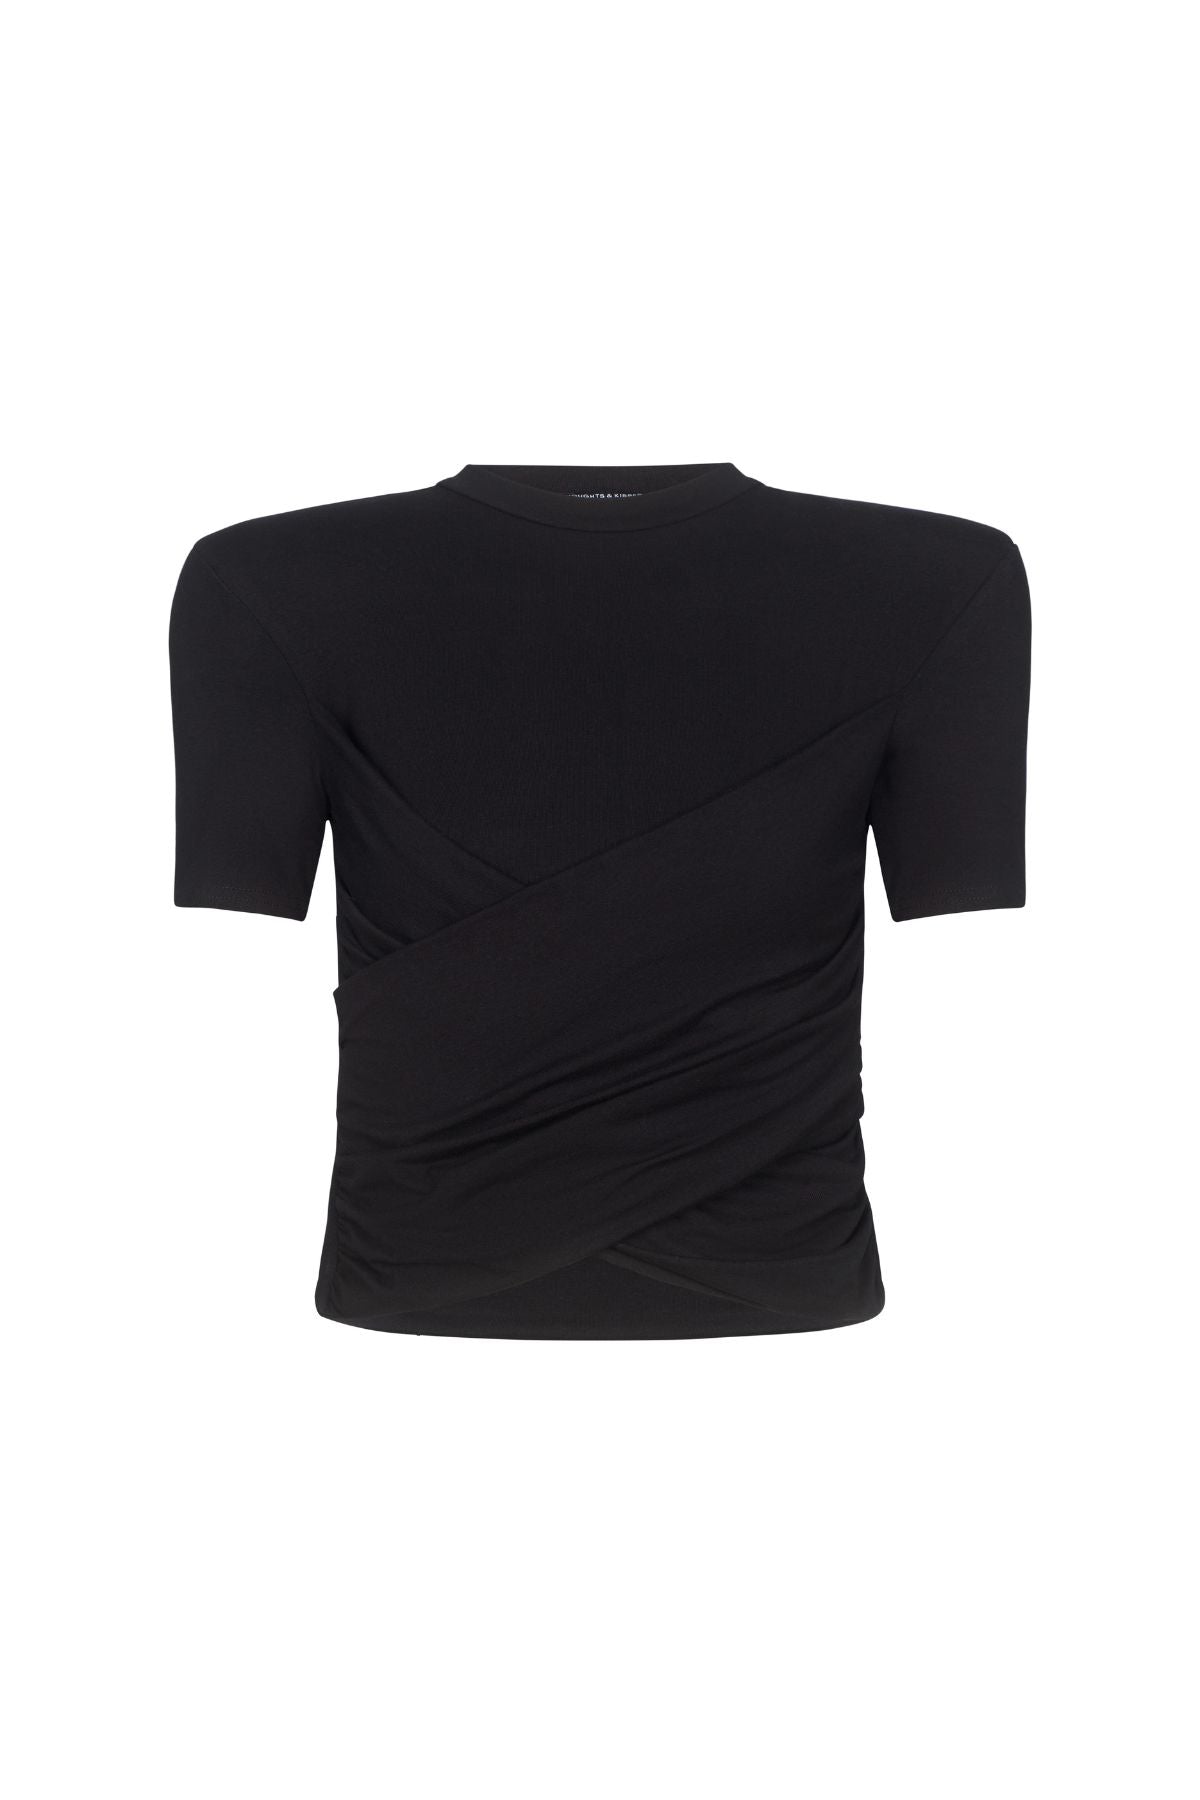 TALIA Black Cropped Shoulder Pad T-Shirt